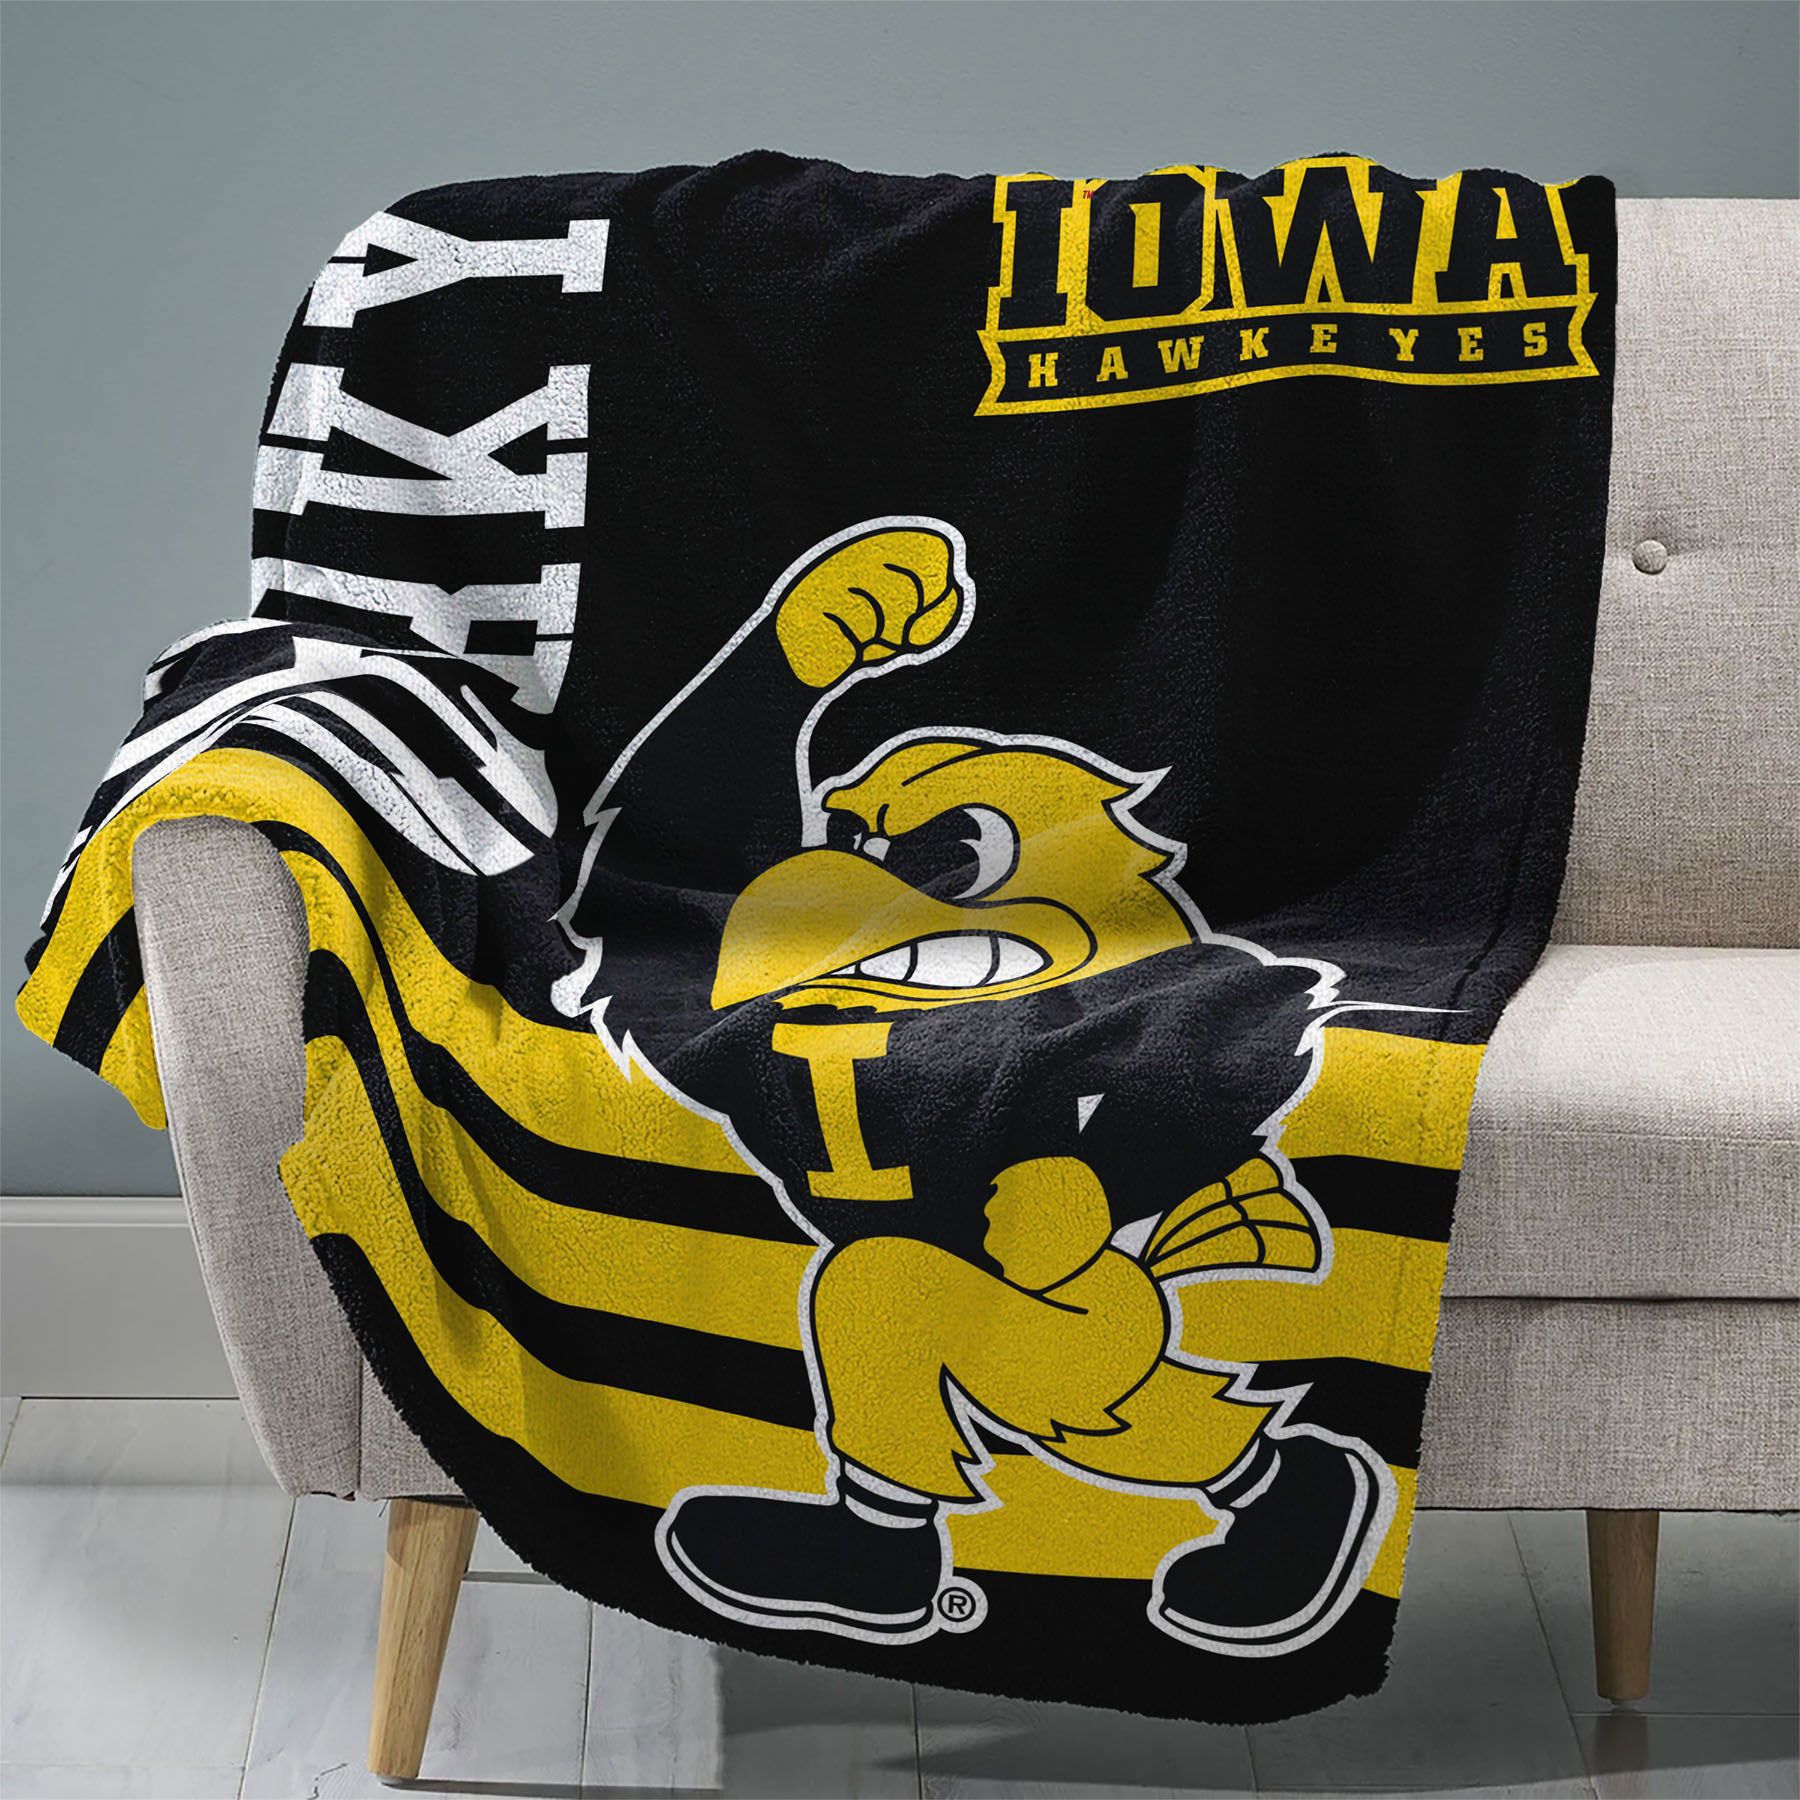 Uncanny Brands Iowa Hawkeyes Blanket